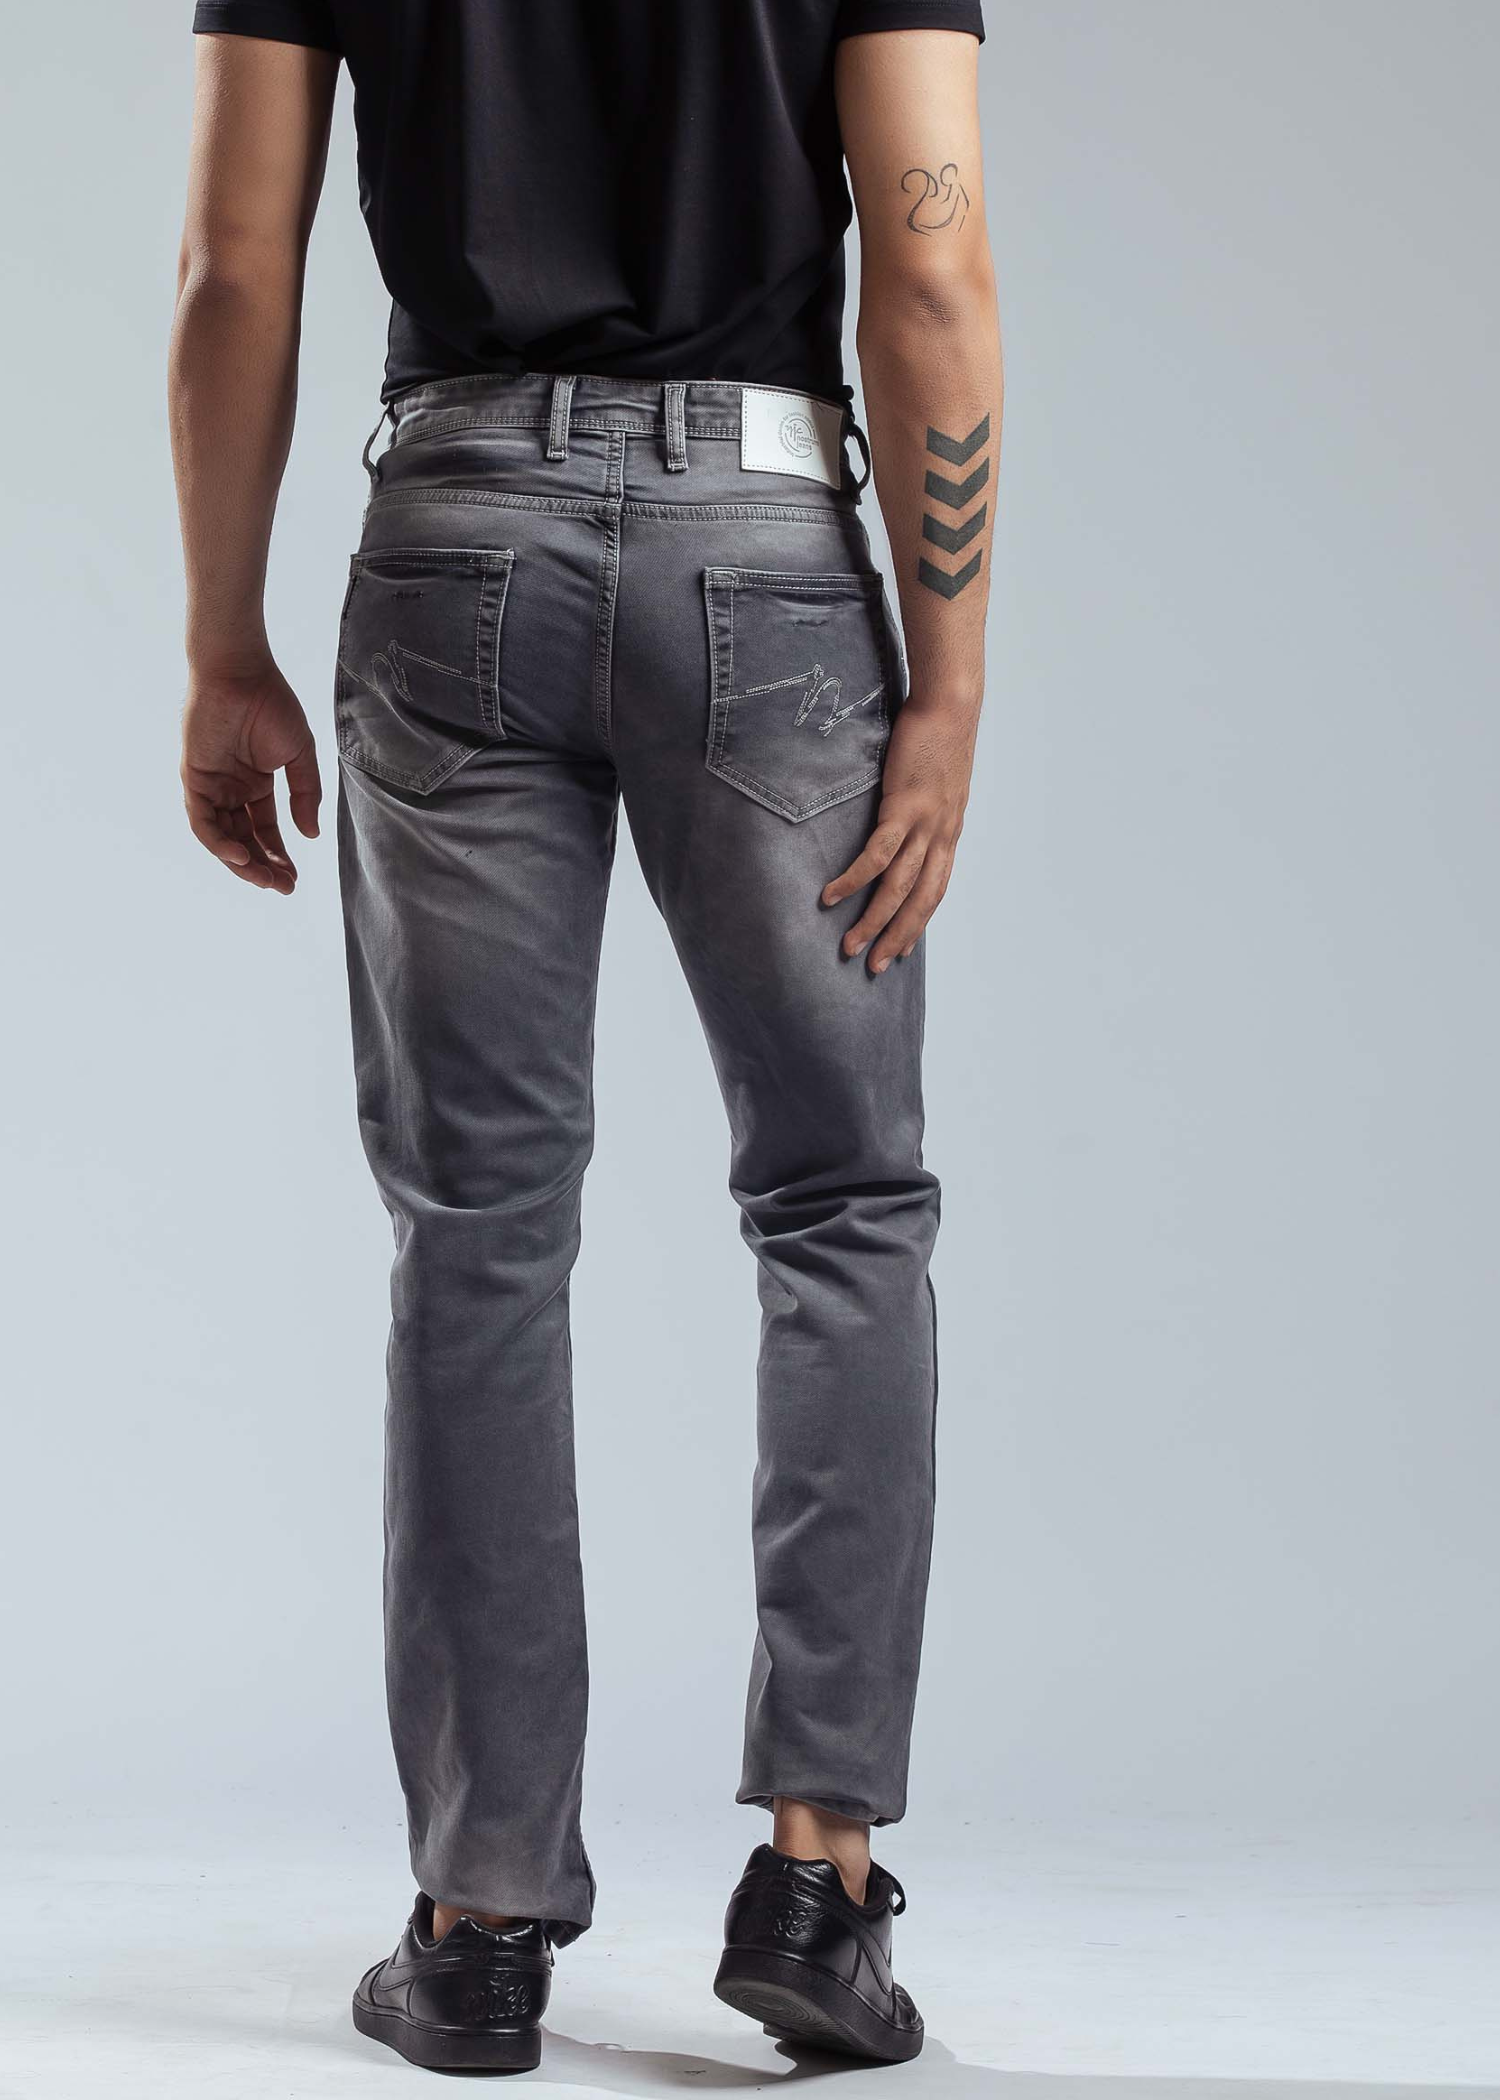 Greymon Straight Fit Denim Jeans For Men - Nostrum